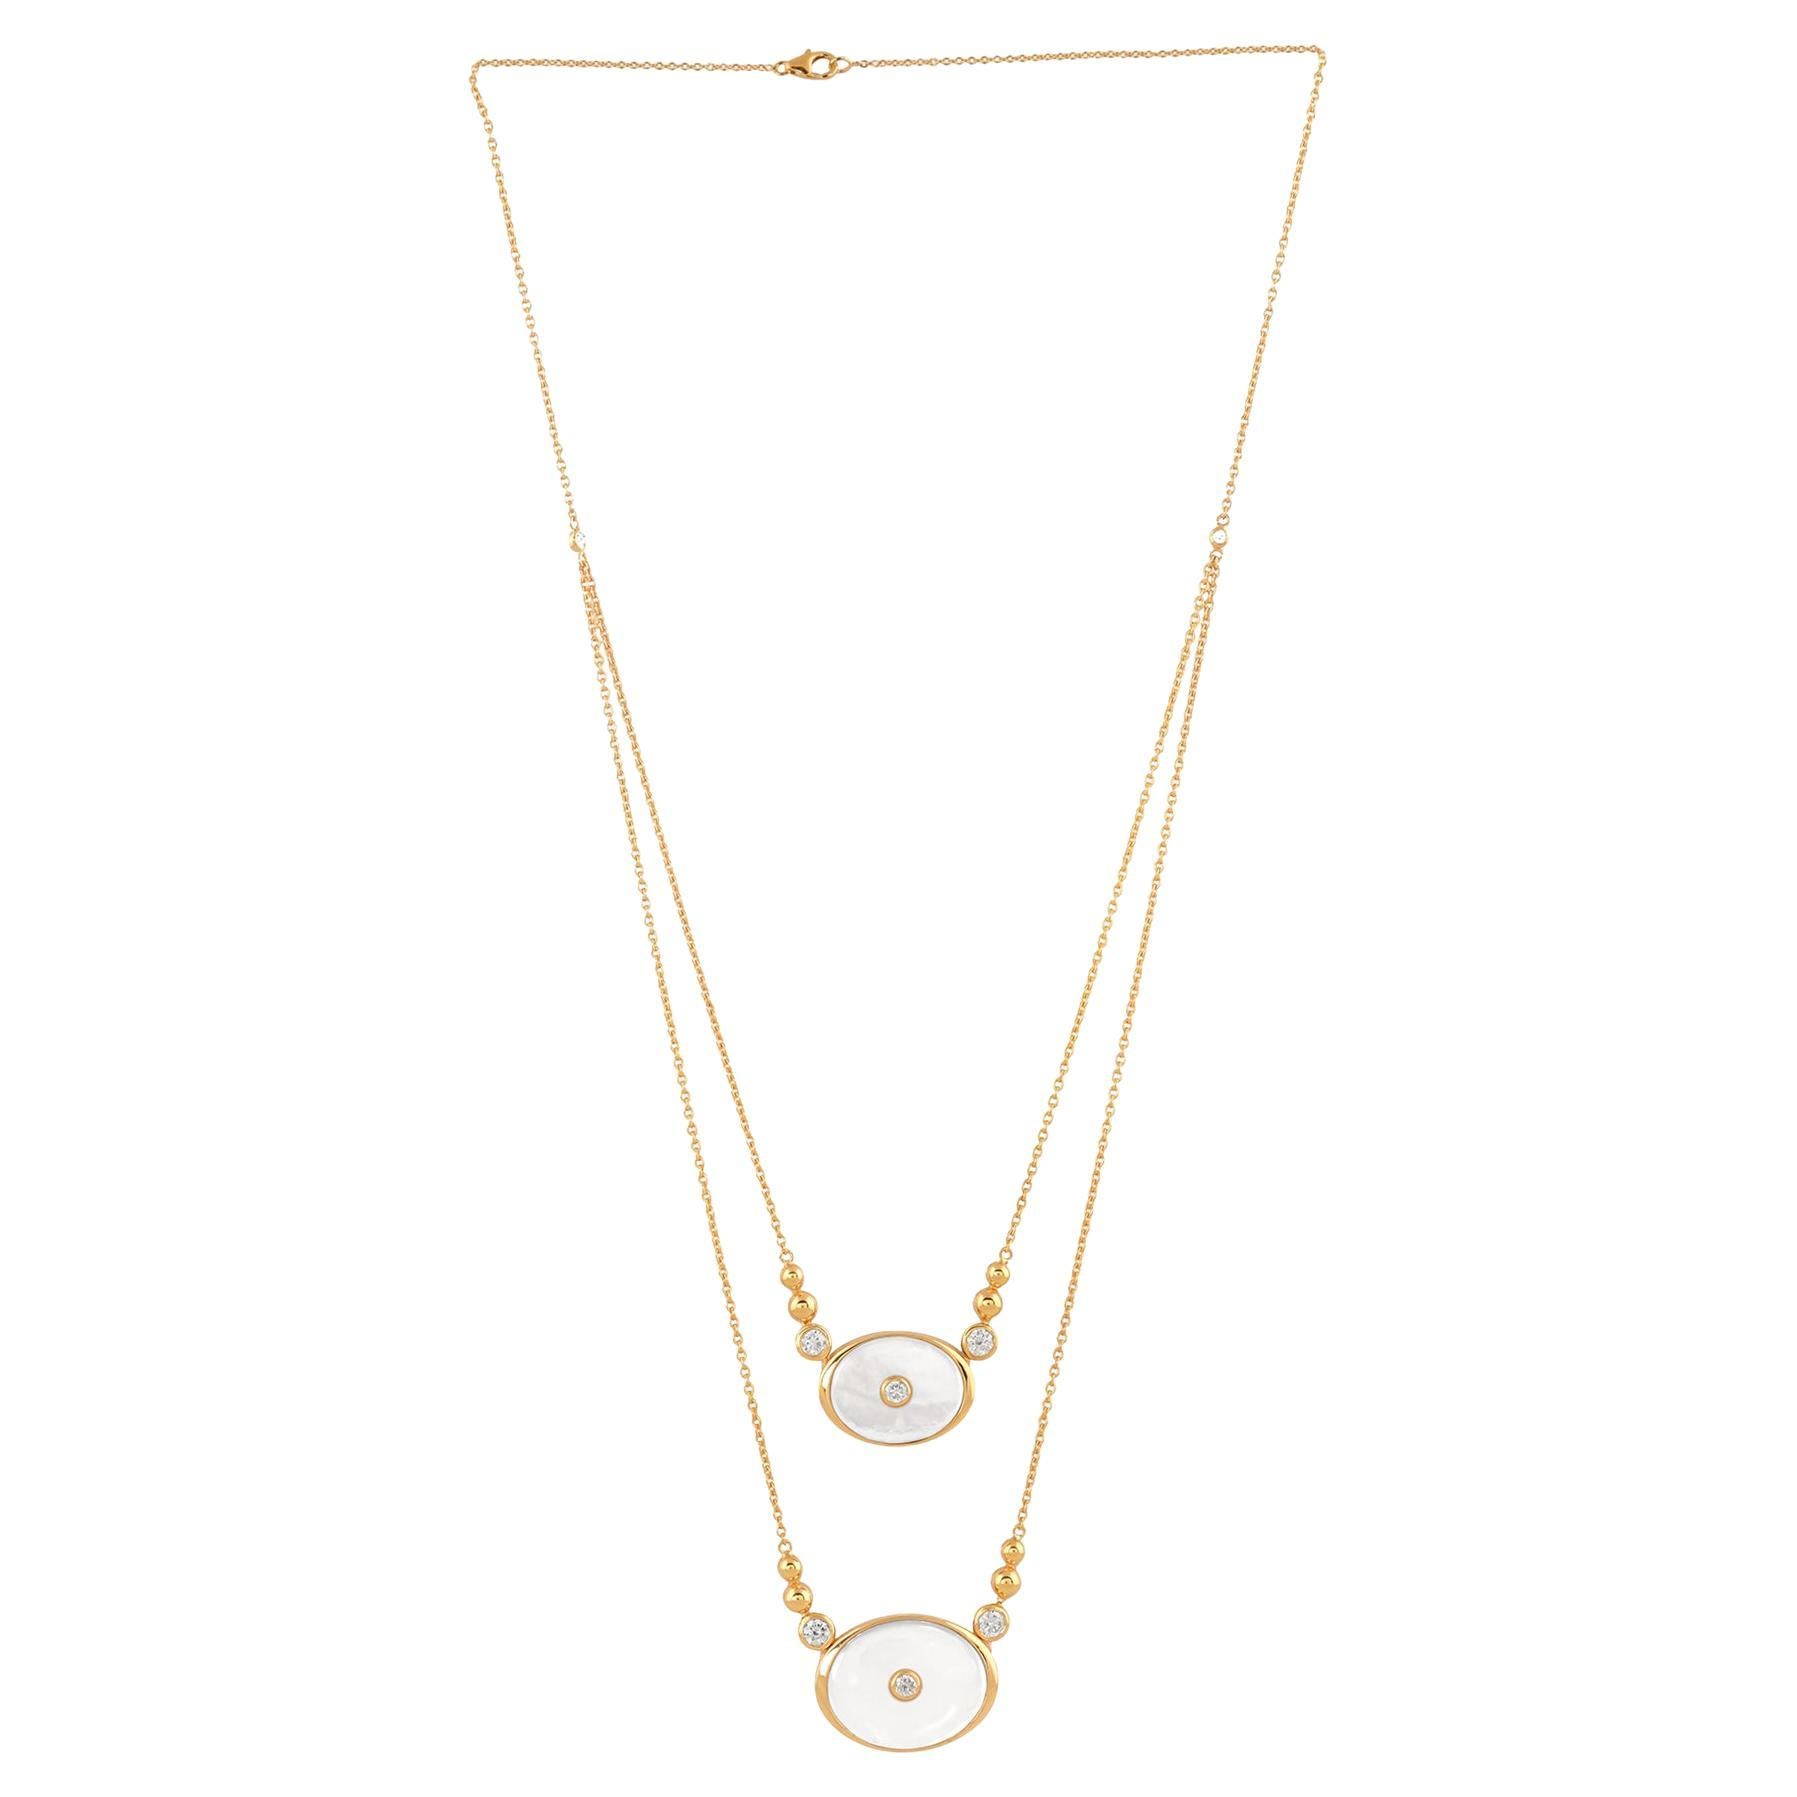 Mother of Pearl Gemstone Pendant Diamond Necklace 18 Karat Yellow Gold Jewelry